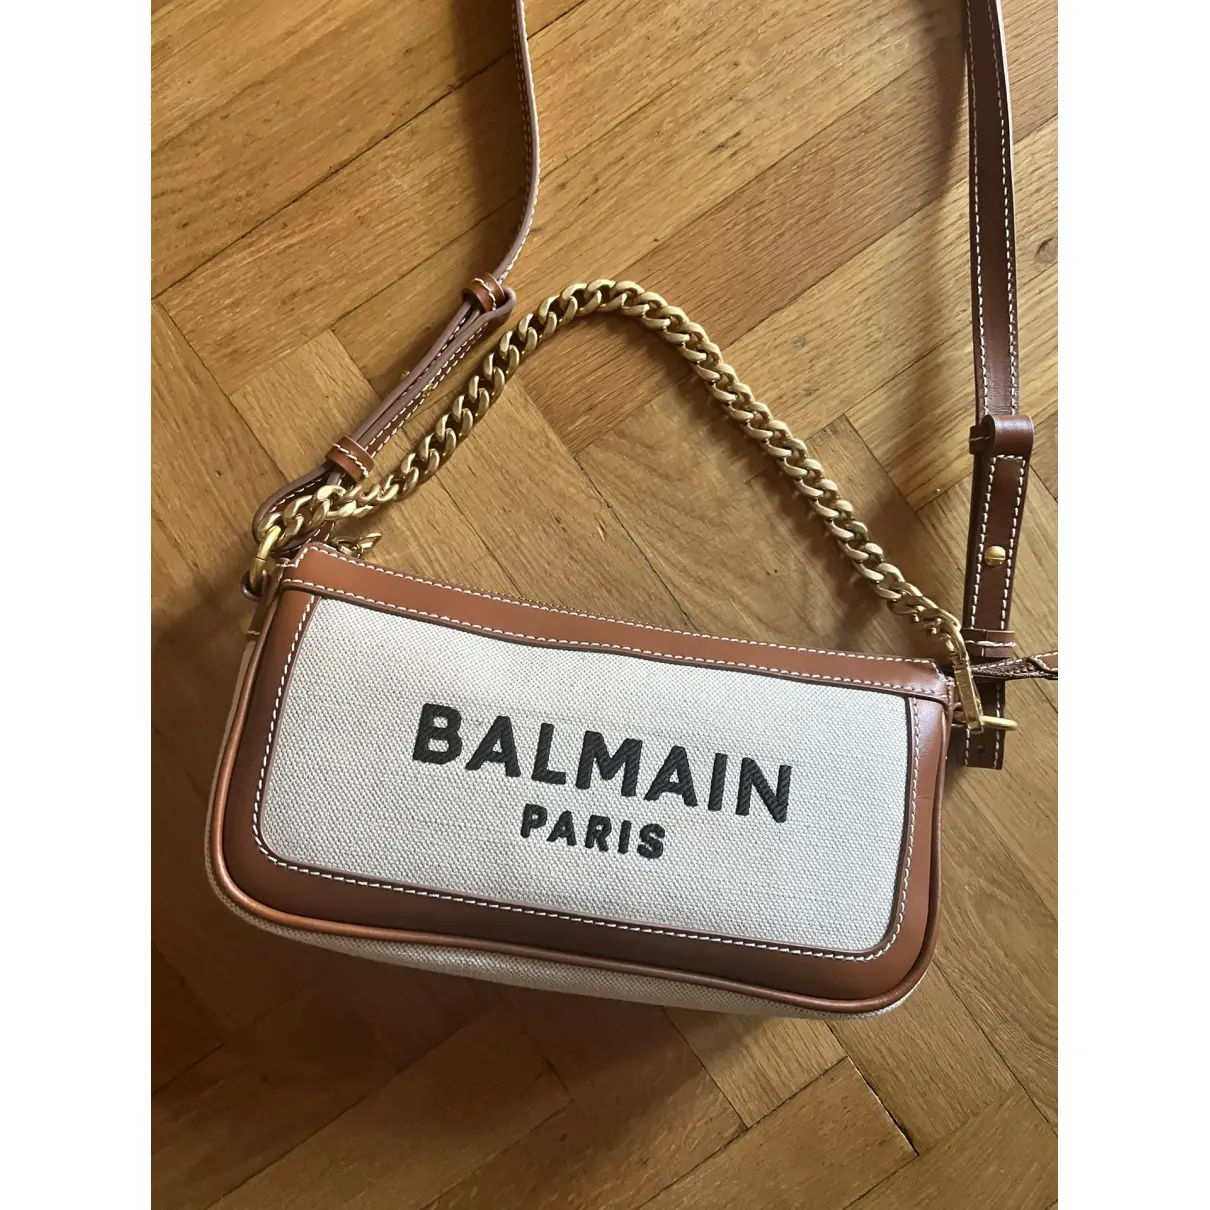 Buy Balmain Cloth crossbody bag online